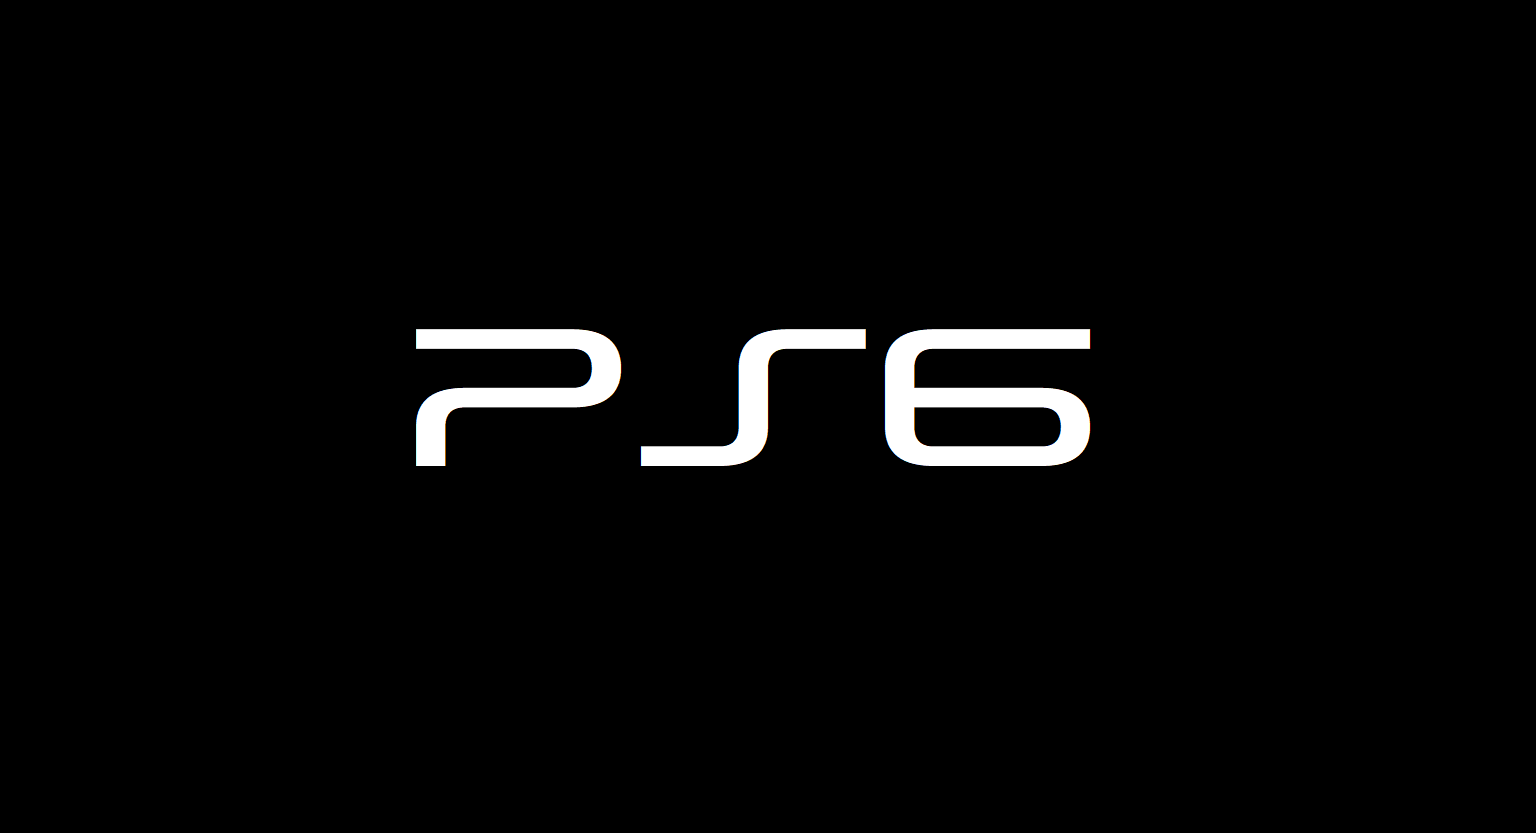 PlayStation 6